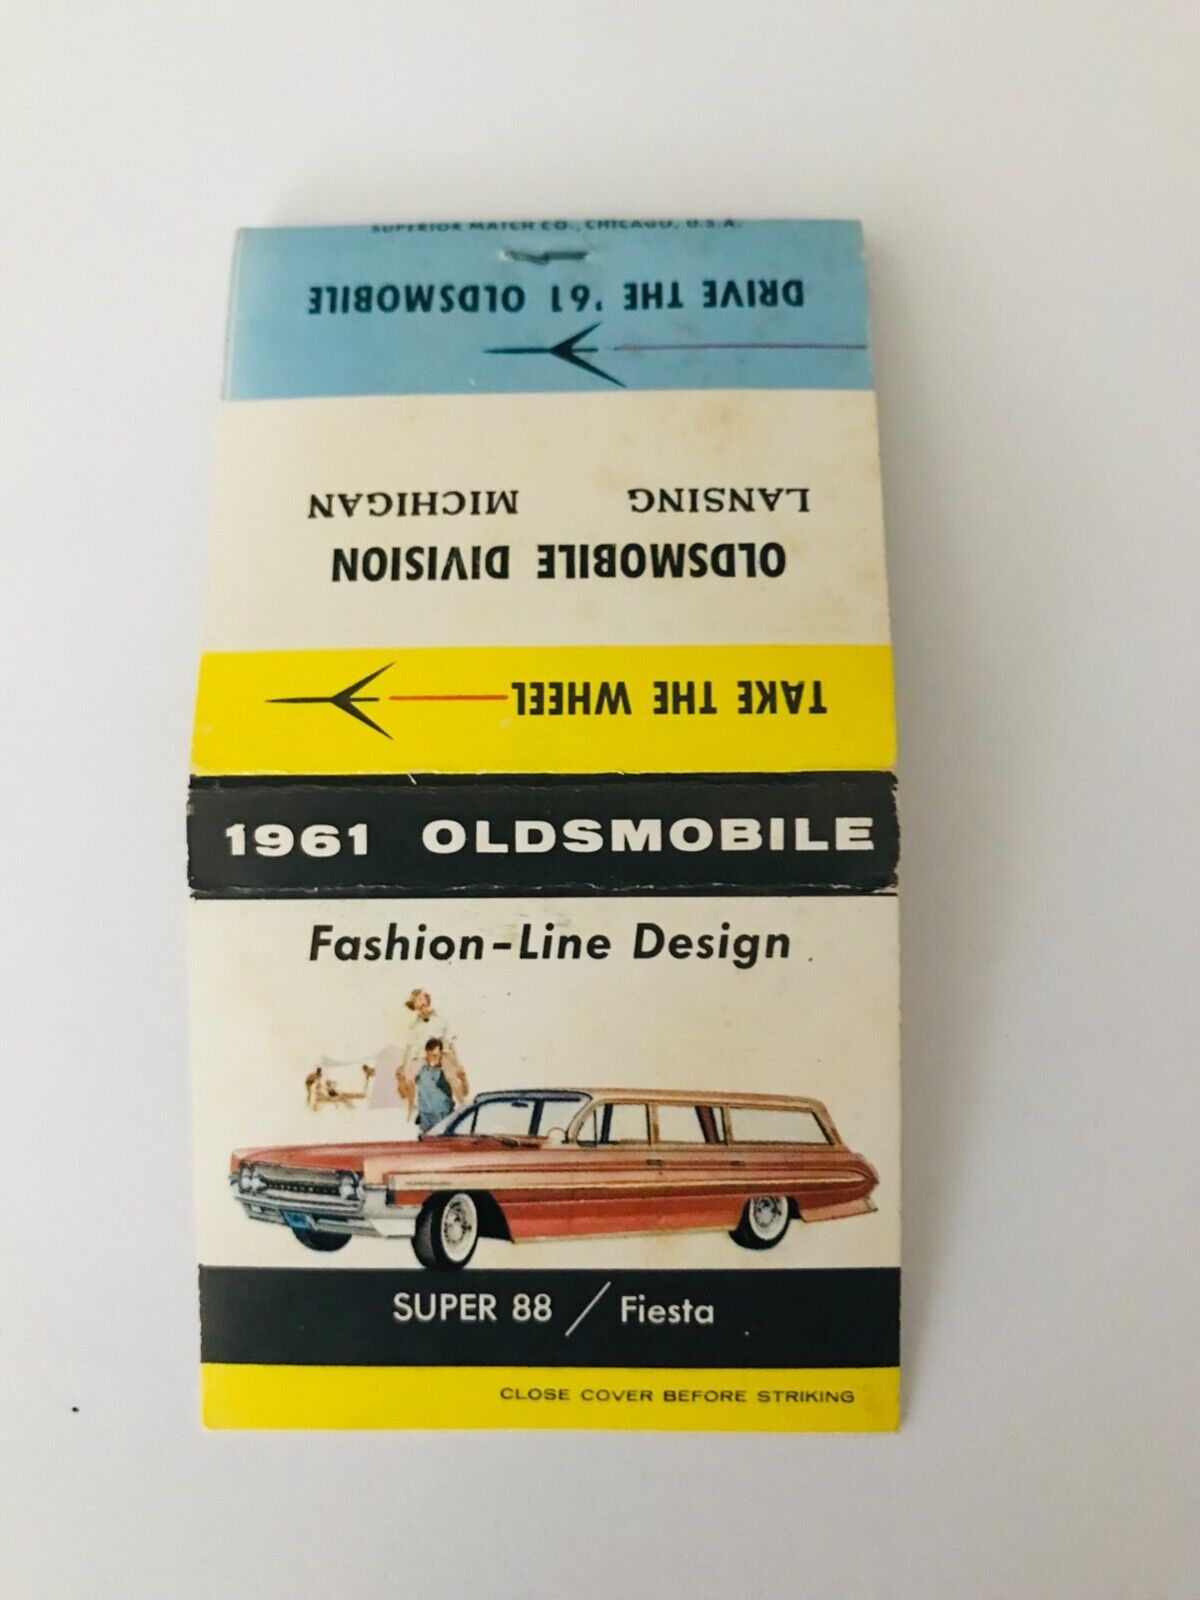 Vintage 1961 Oldsmobile Super 88 Fiesta Lansing MI Matchbook Advertising Cars